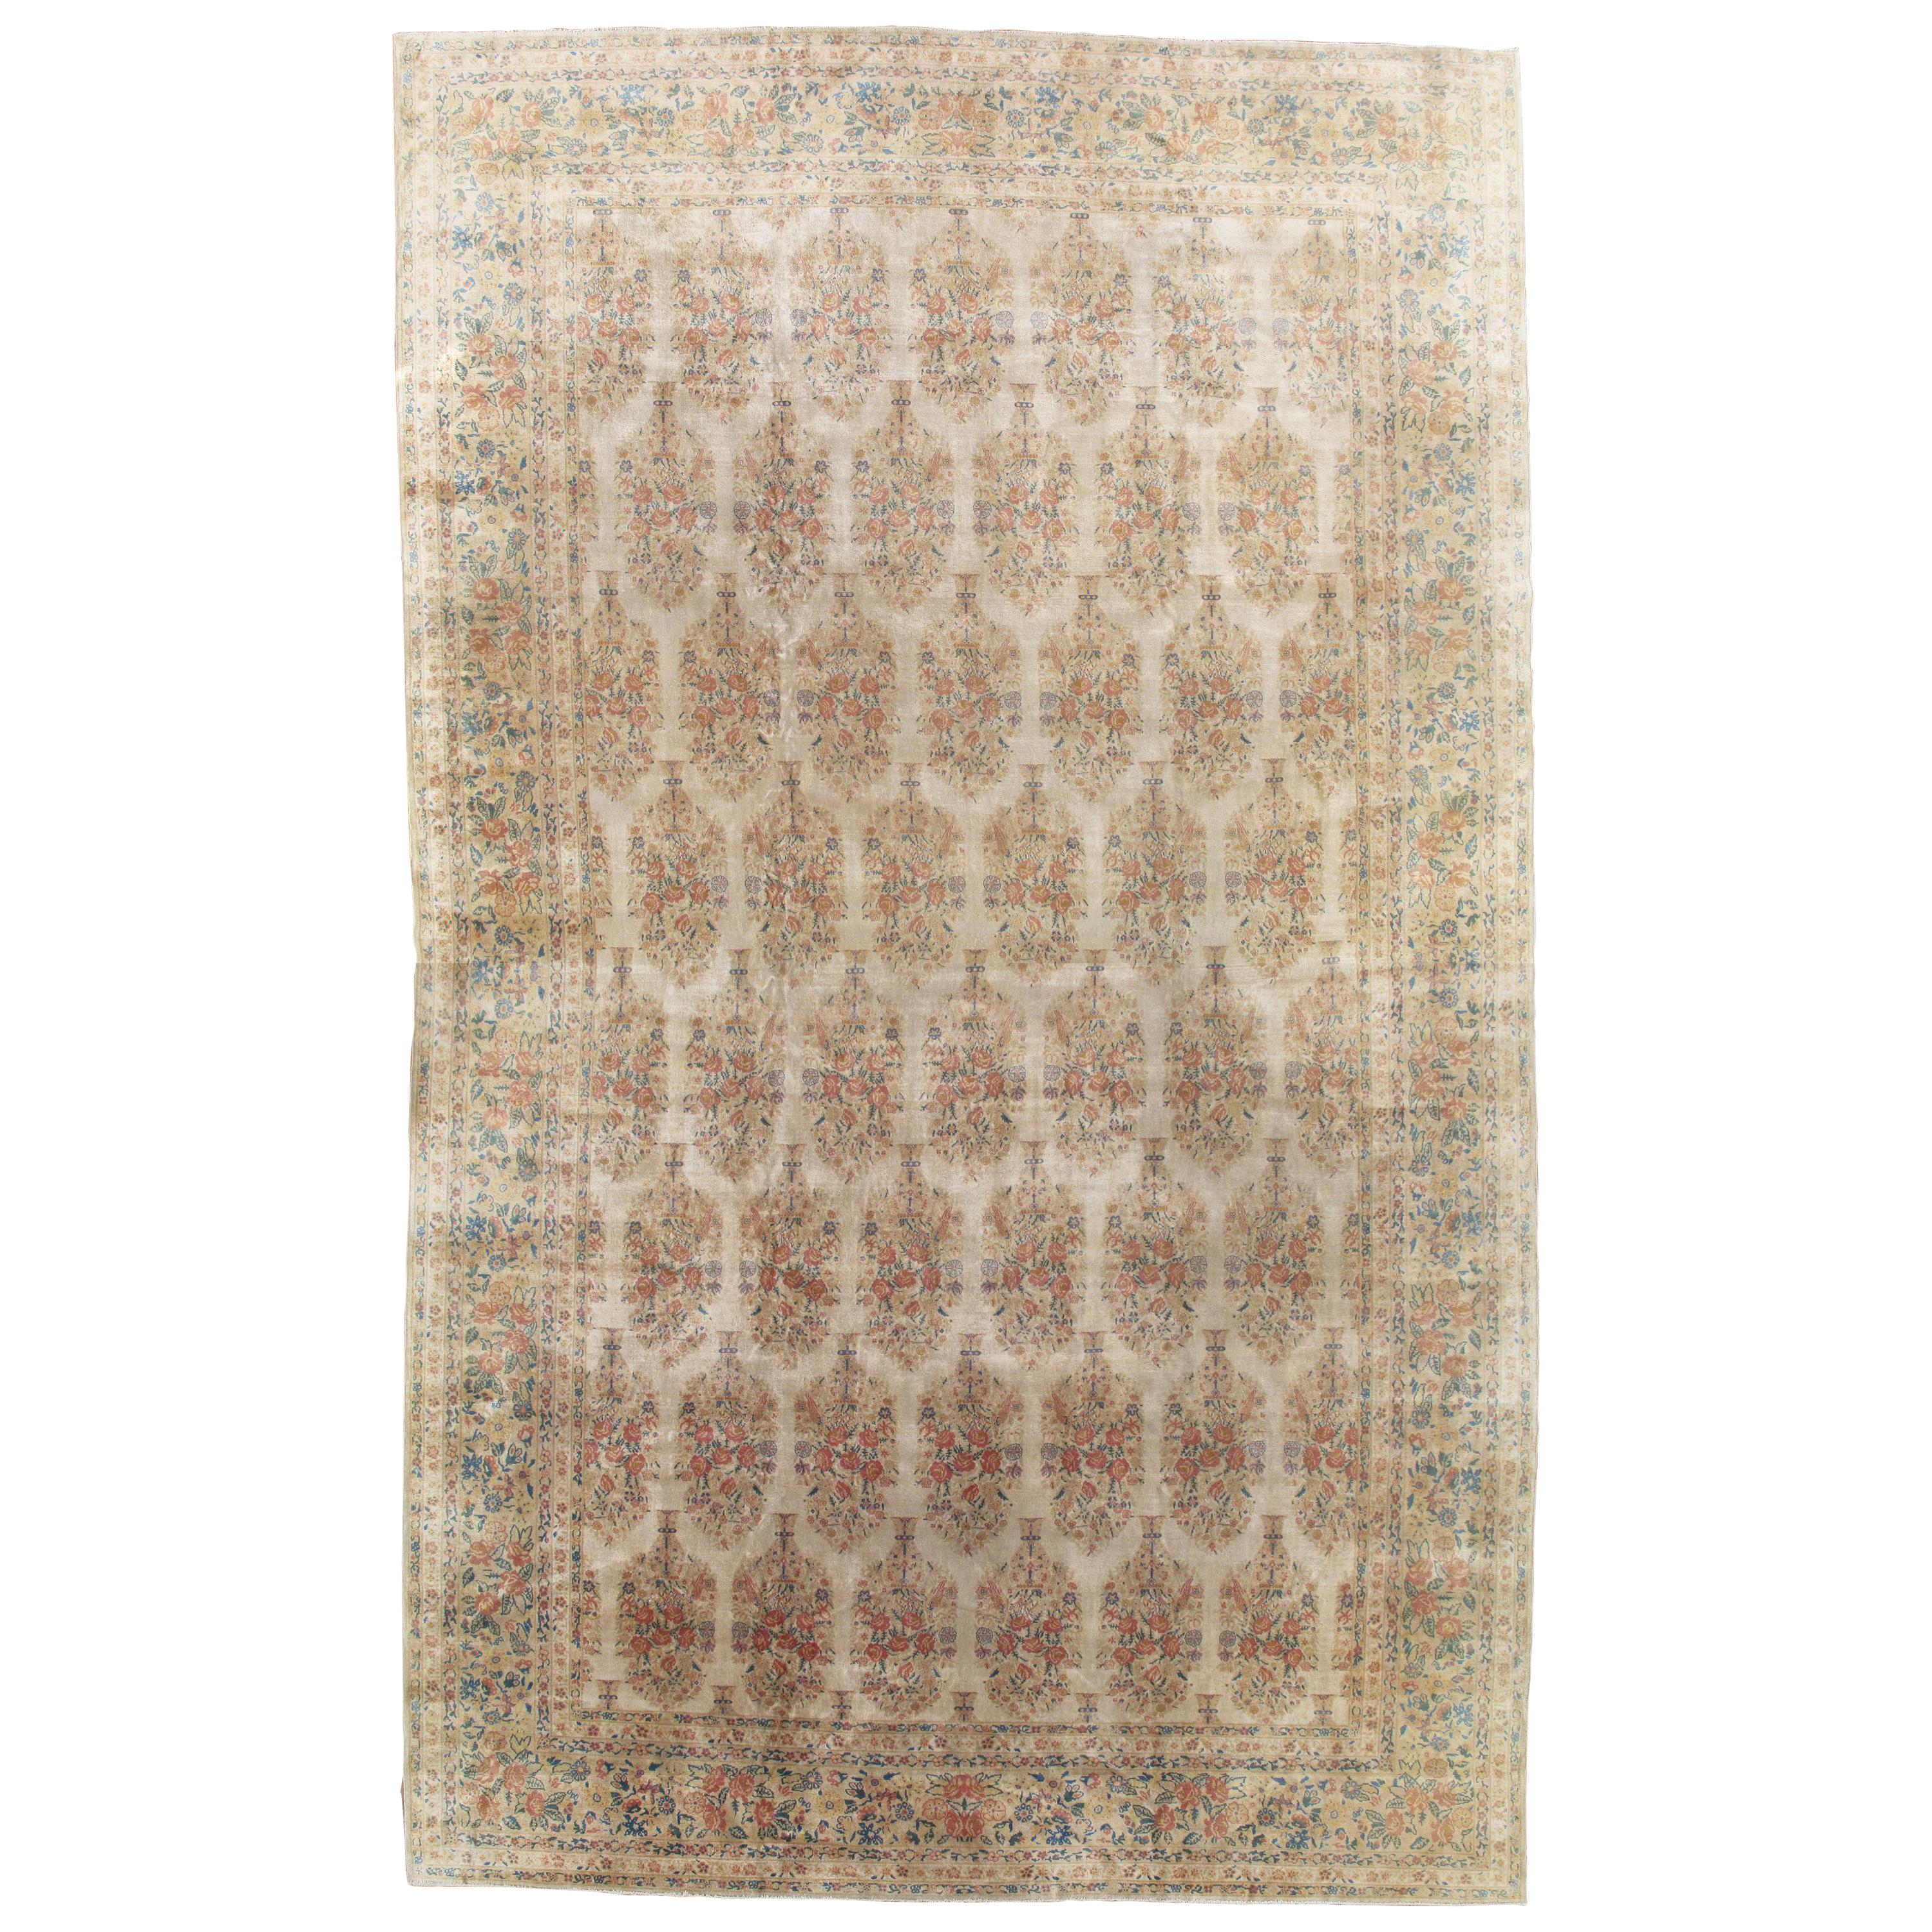 Antique Persian Kerman Carpet